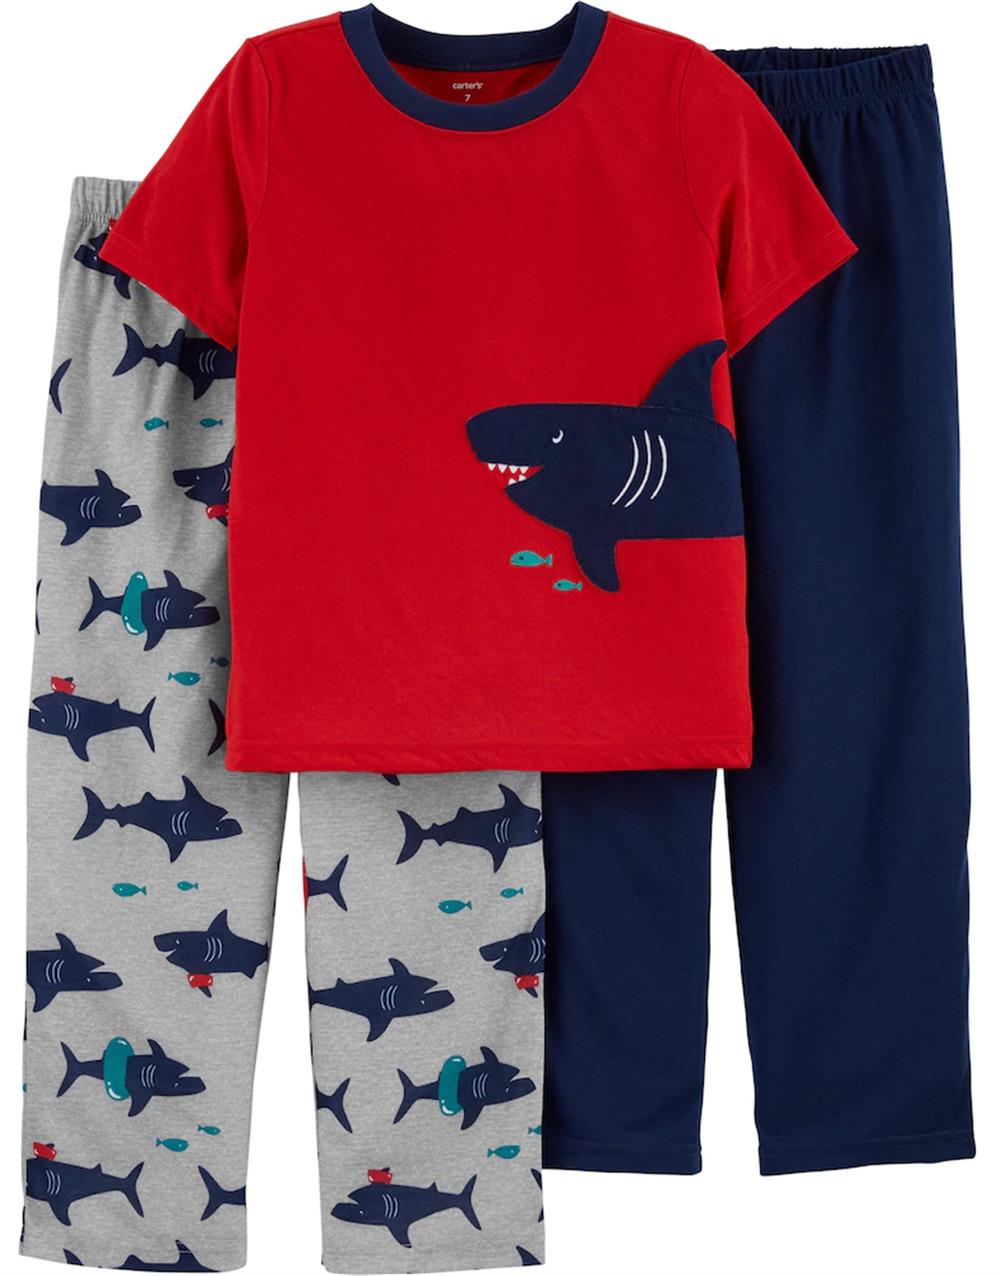 Carters Boys 2T-4T Shark 3-Piece Pajama Set